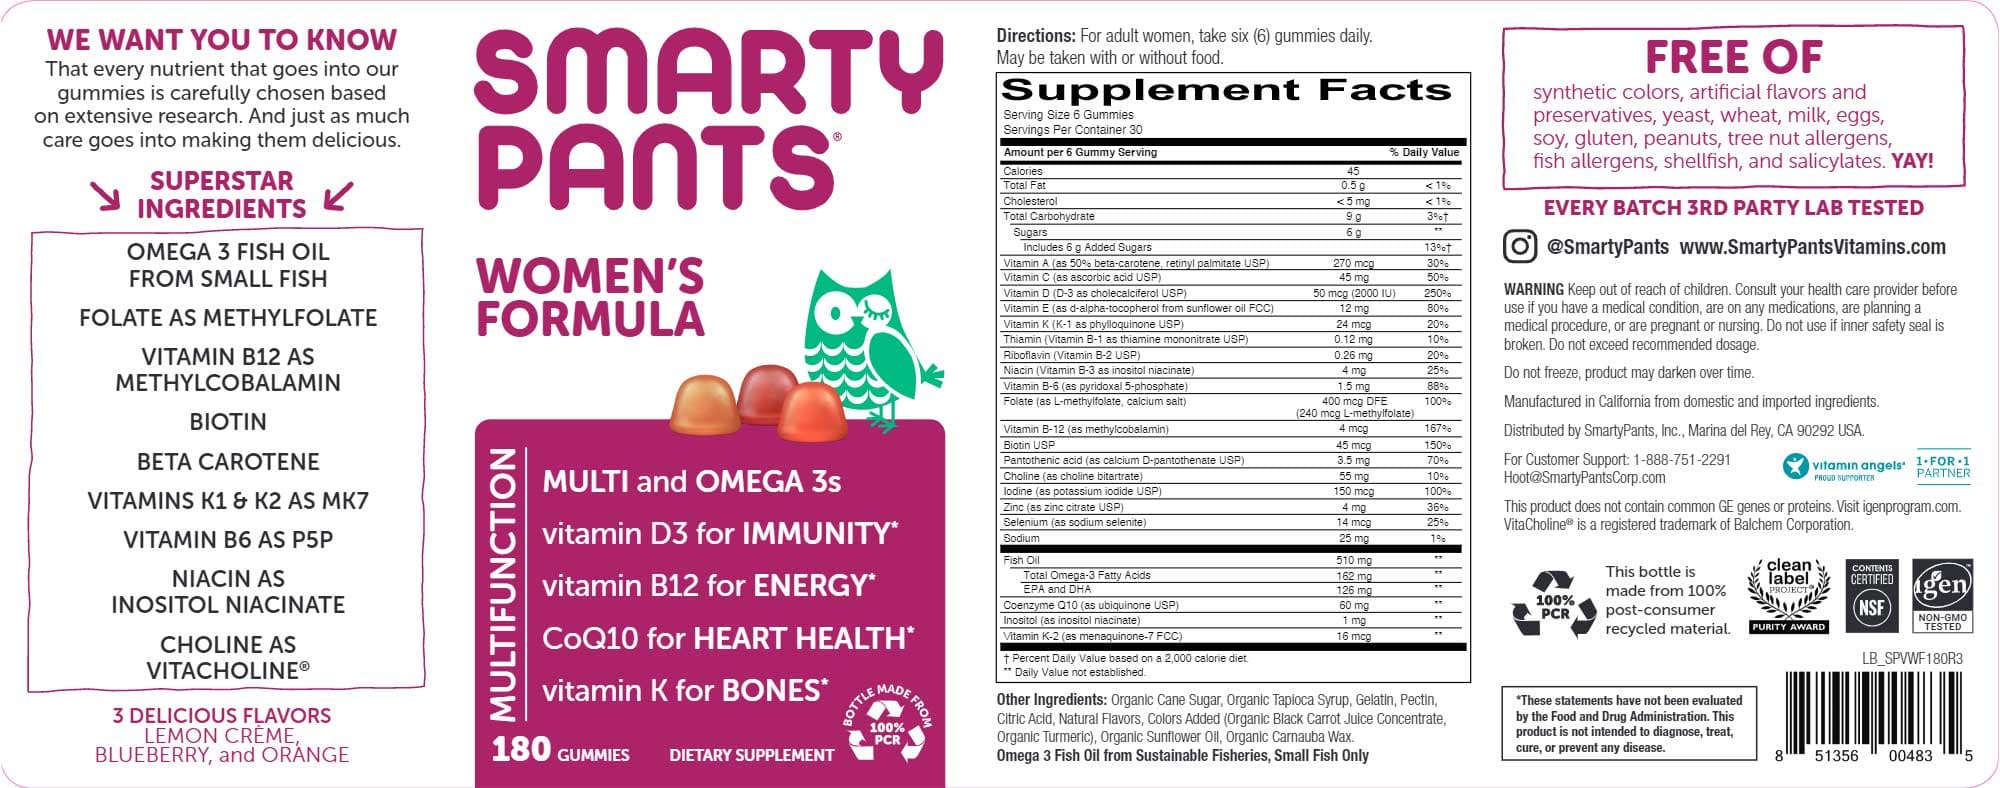 SmartyPants Women's Formula Ingredients